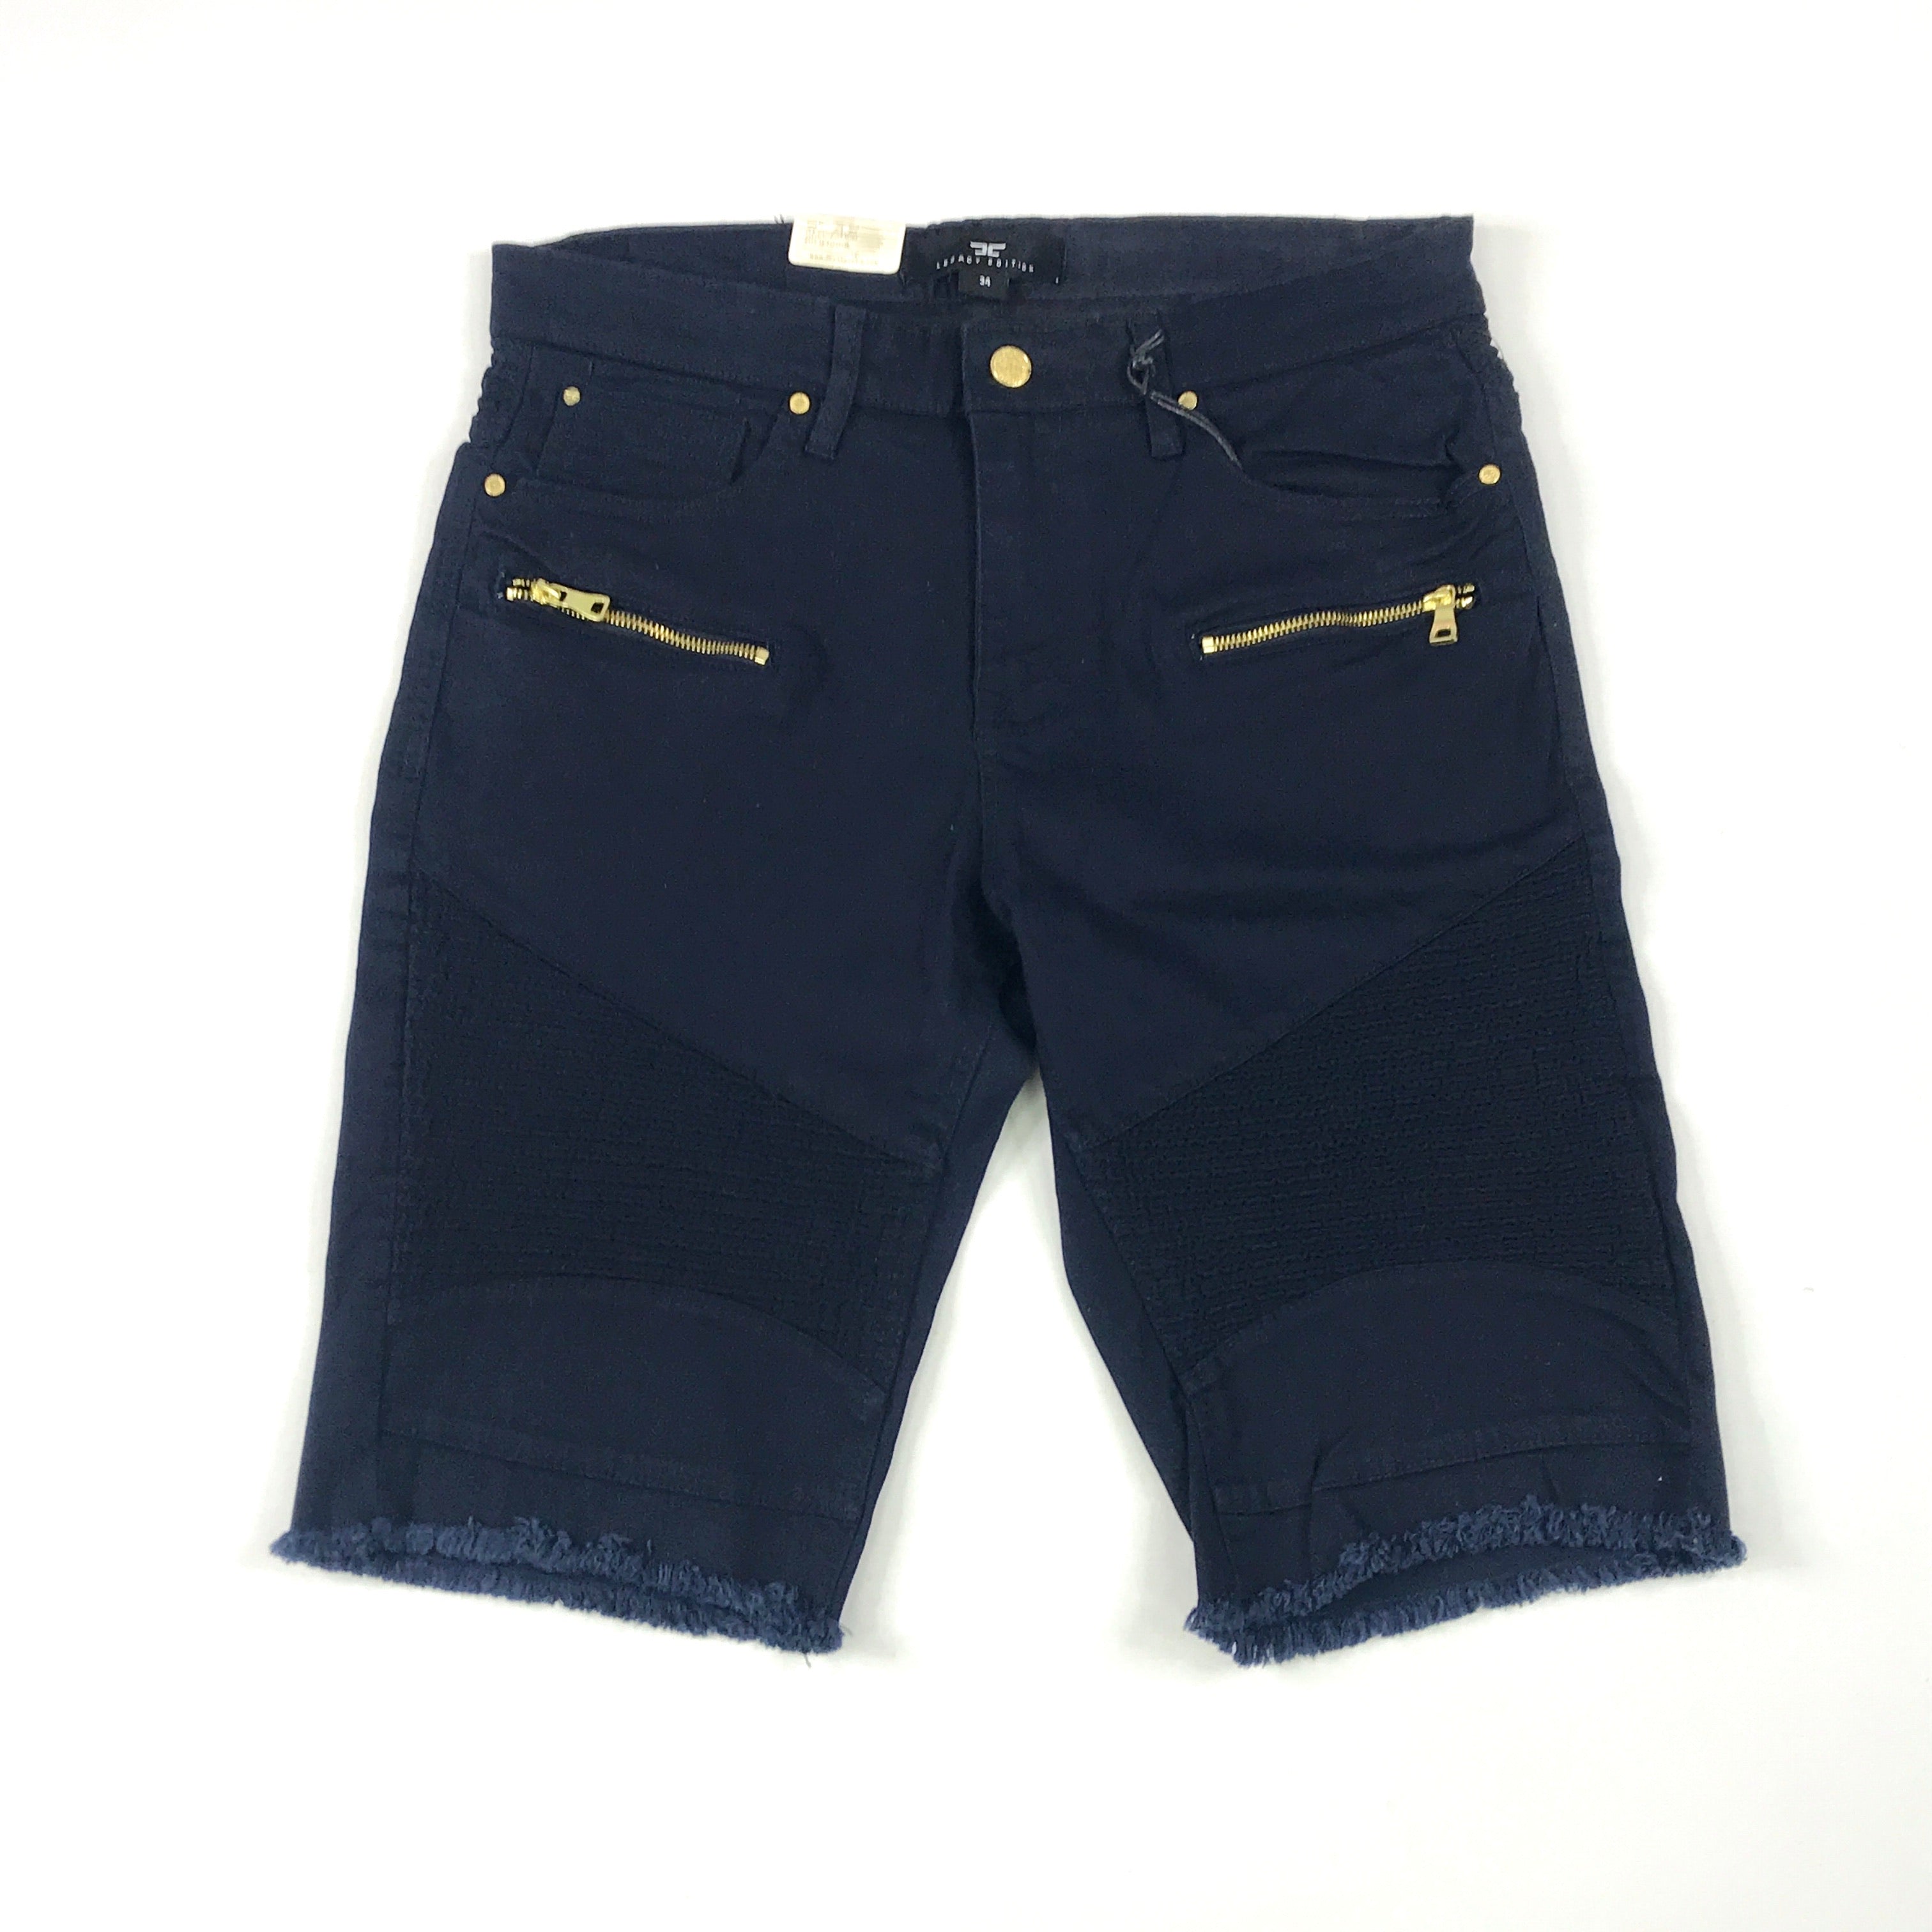 Jordan Craig navy shorts w/gold zippers